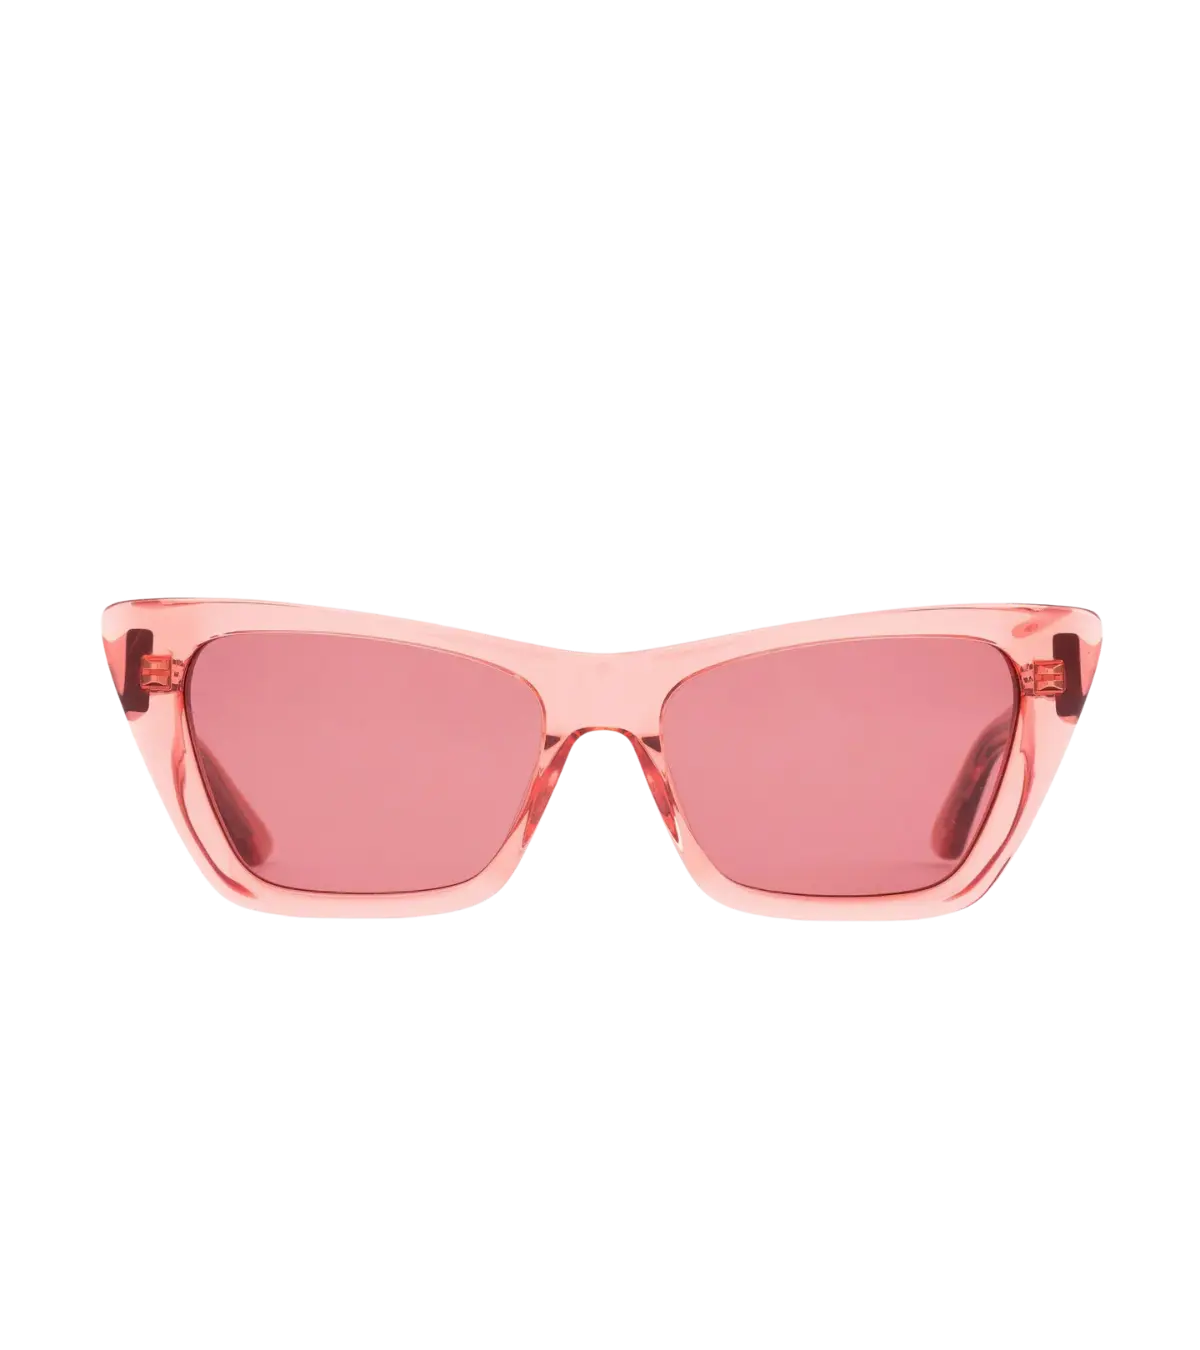 Sito, Wonderland Sunglasses (Watermelon)